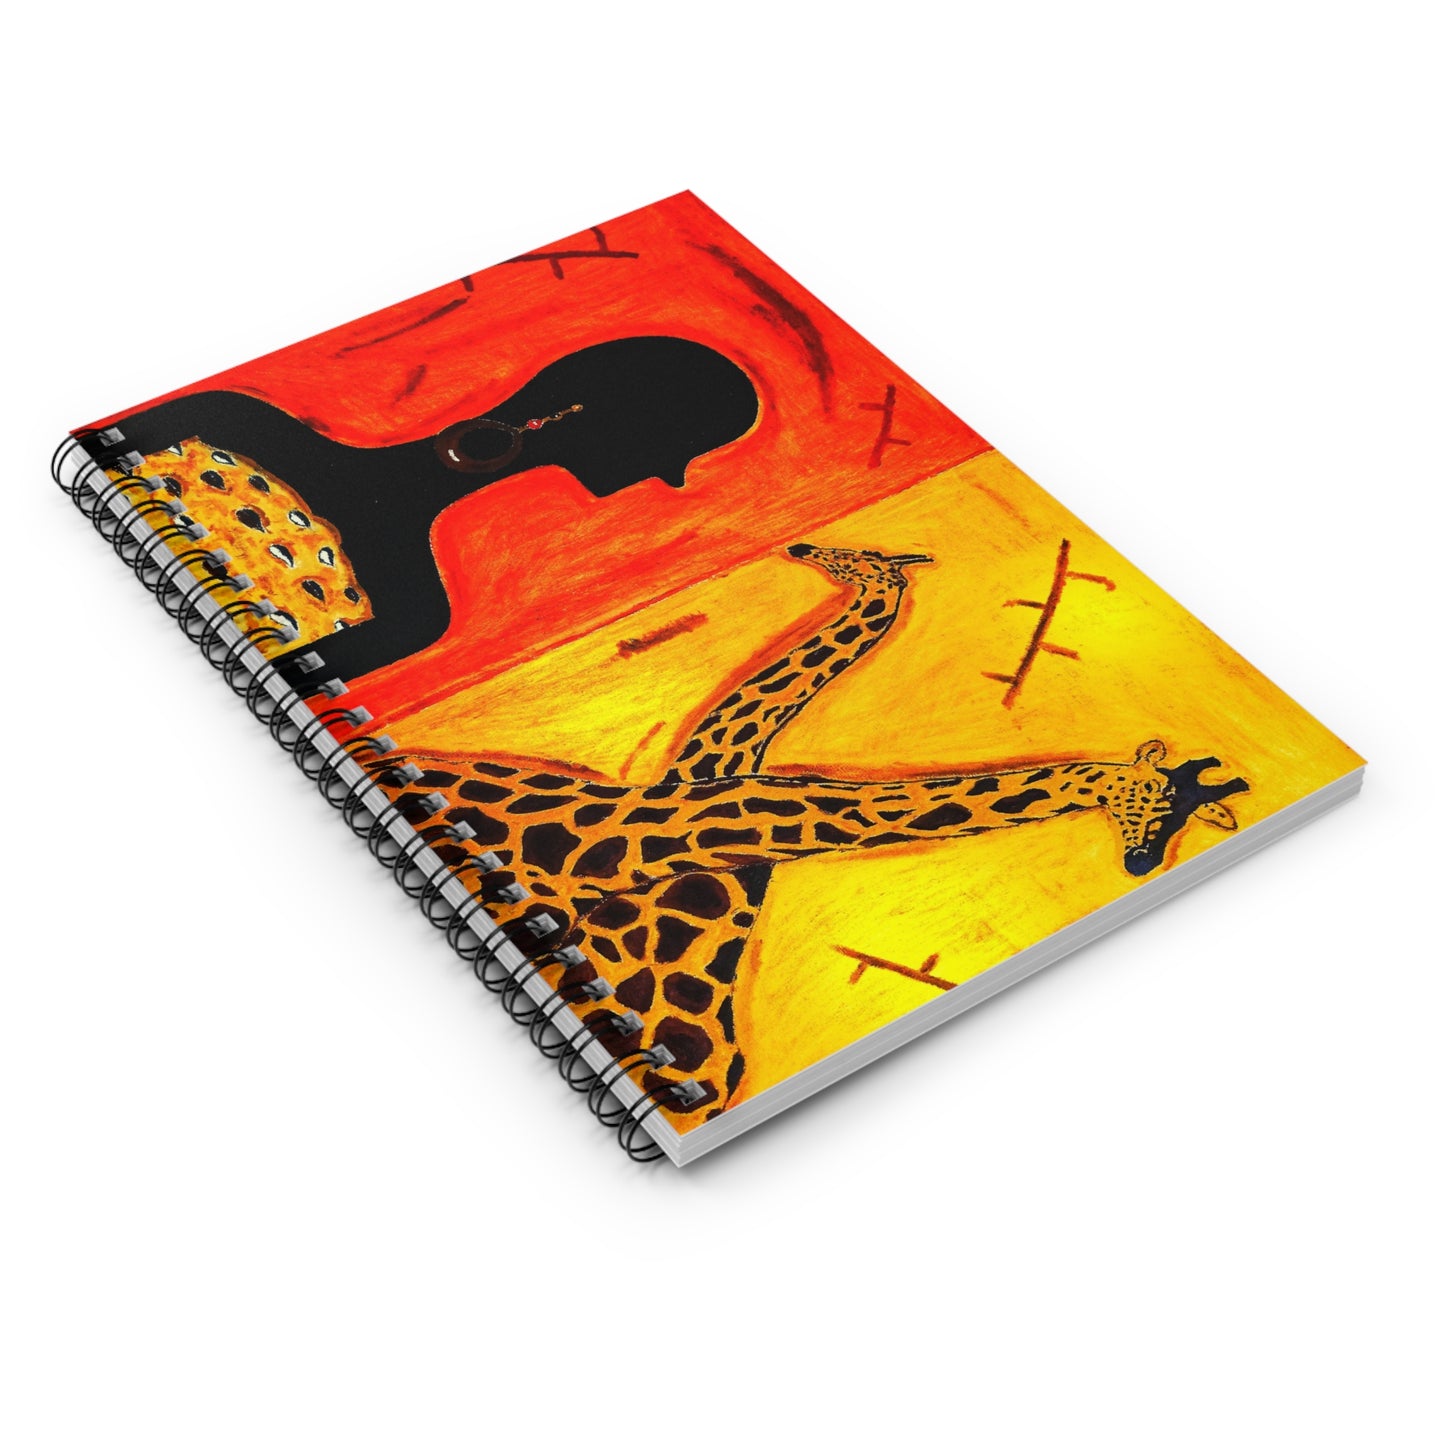 Scarlet Red Giraffe Spiral Notebook - Ruled Line